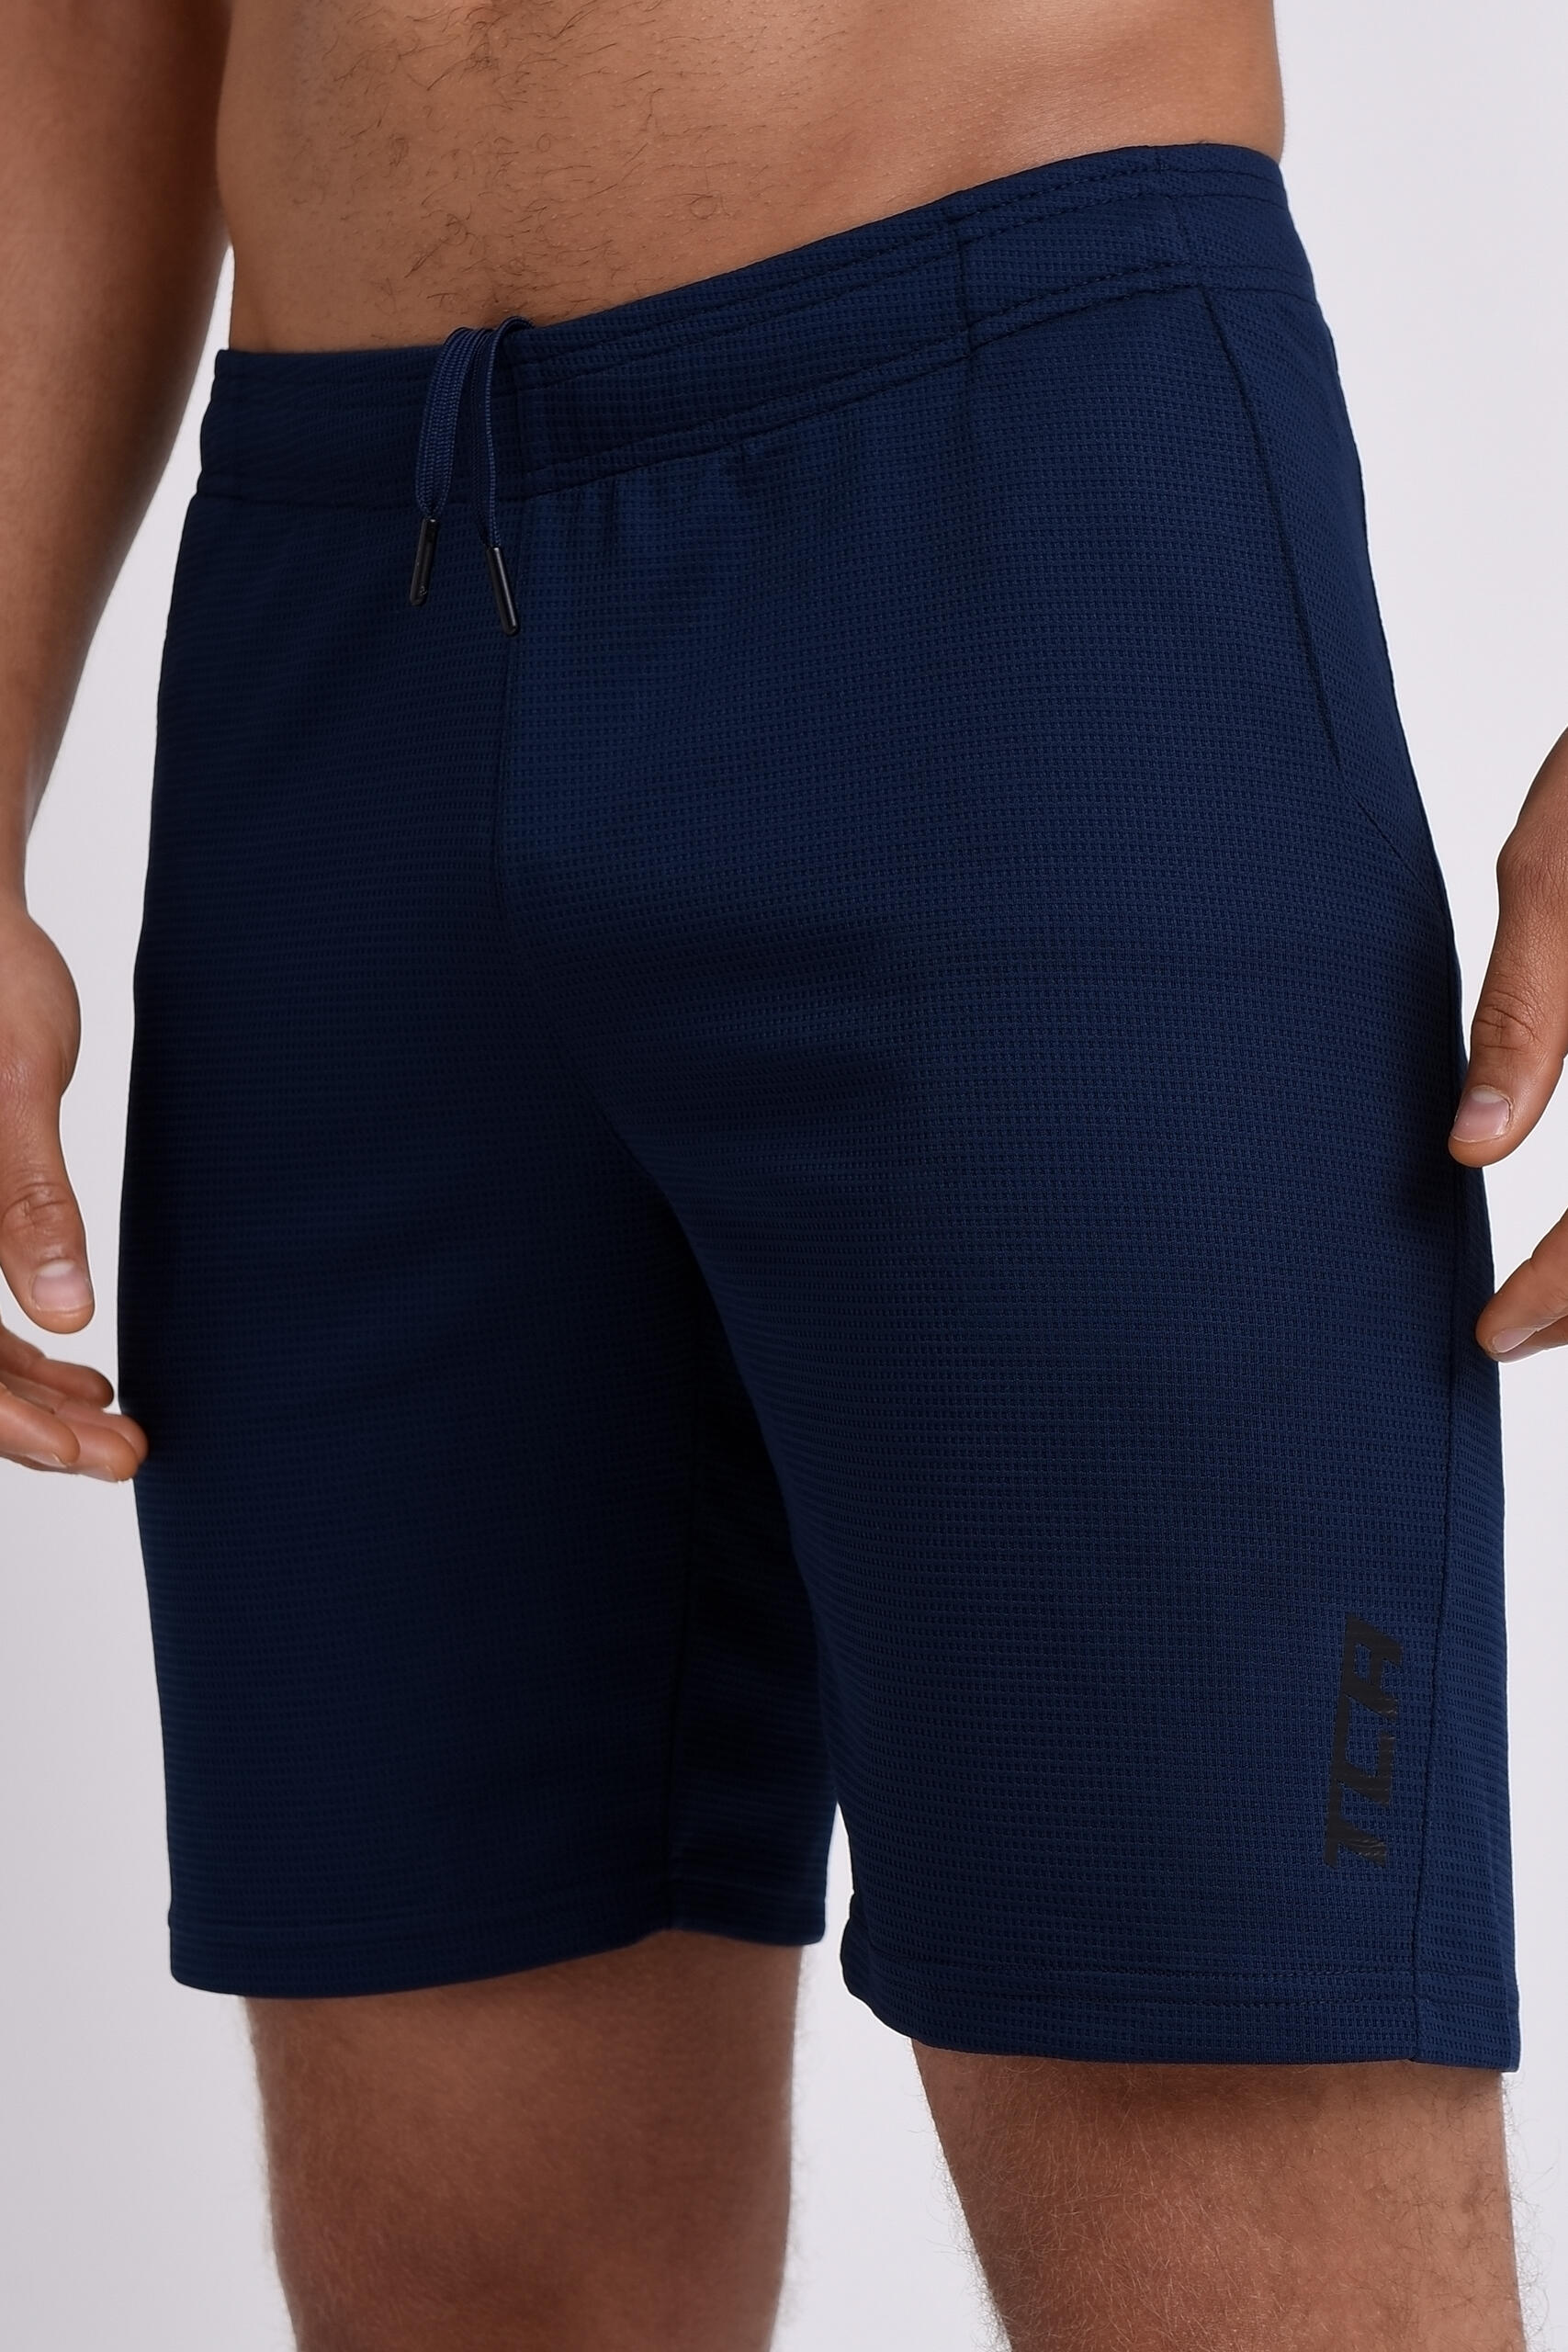 Men's Aeron Running Shorts with Pockets - Navy Eclipse 3/5